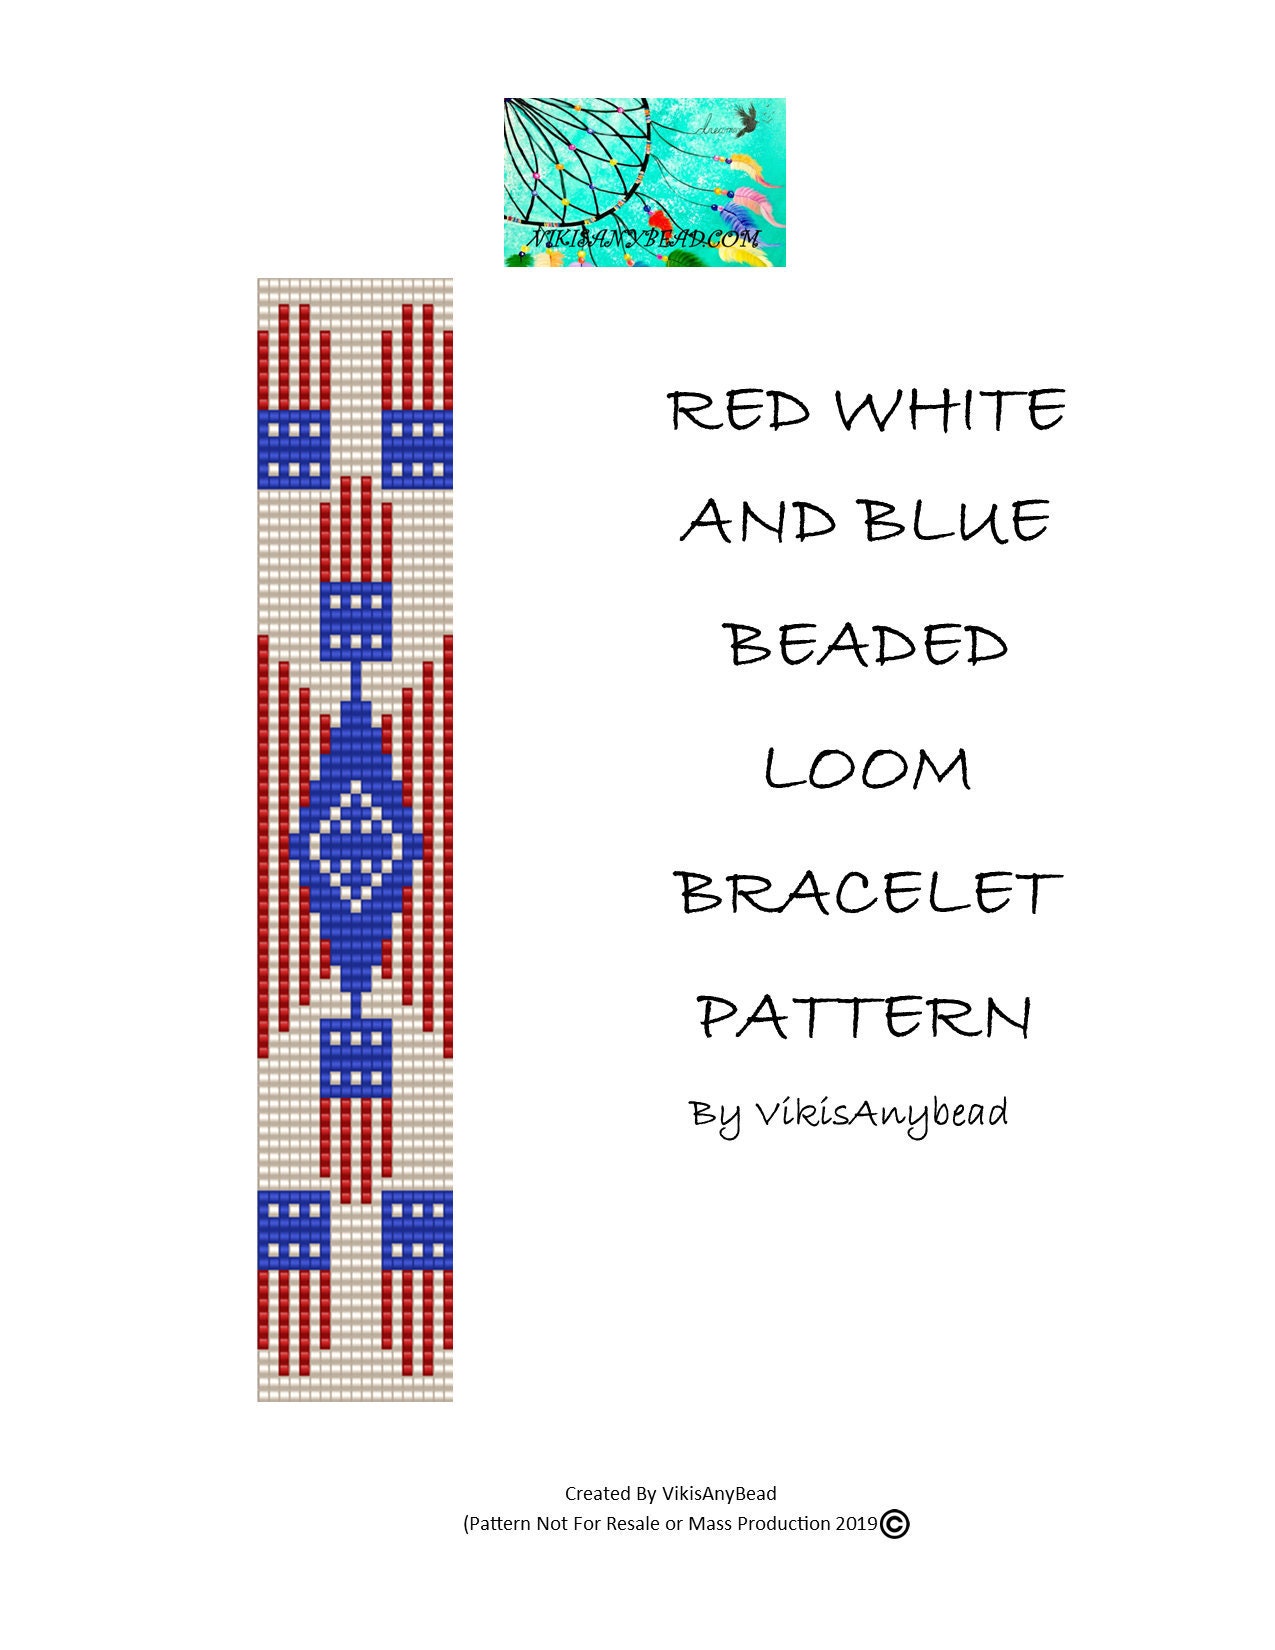 Sparkler Bracelet: Free July 4th Bead-Loomed Bracelet Pattern